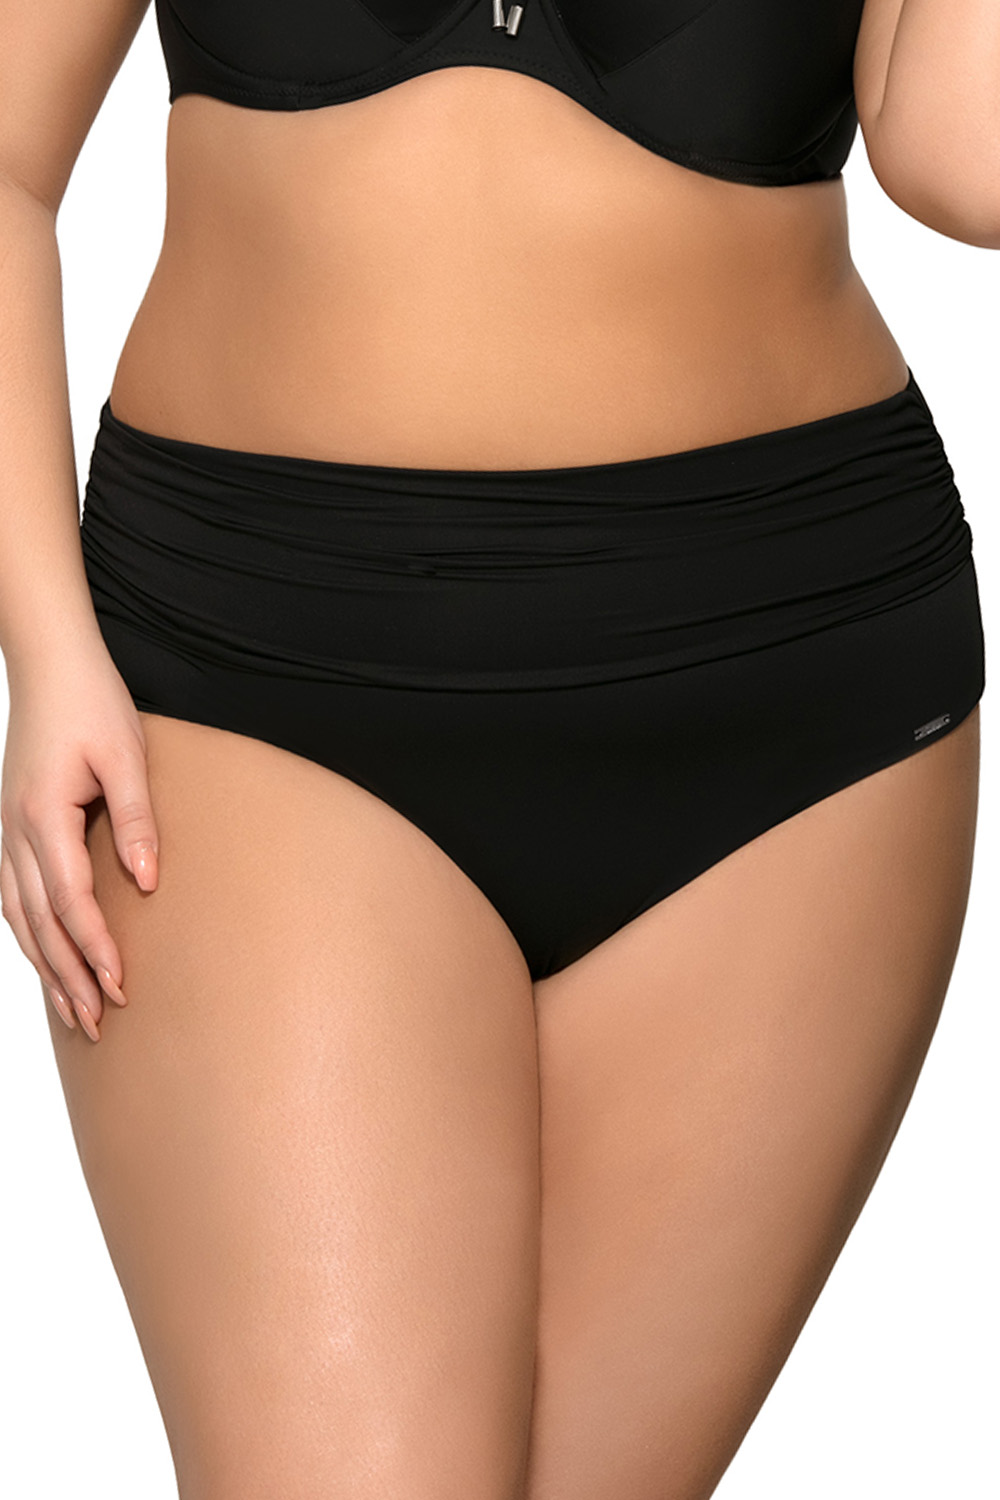 Swimming panties model 164060 Ava black Ladies